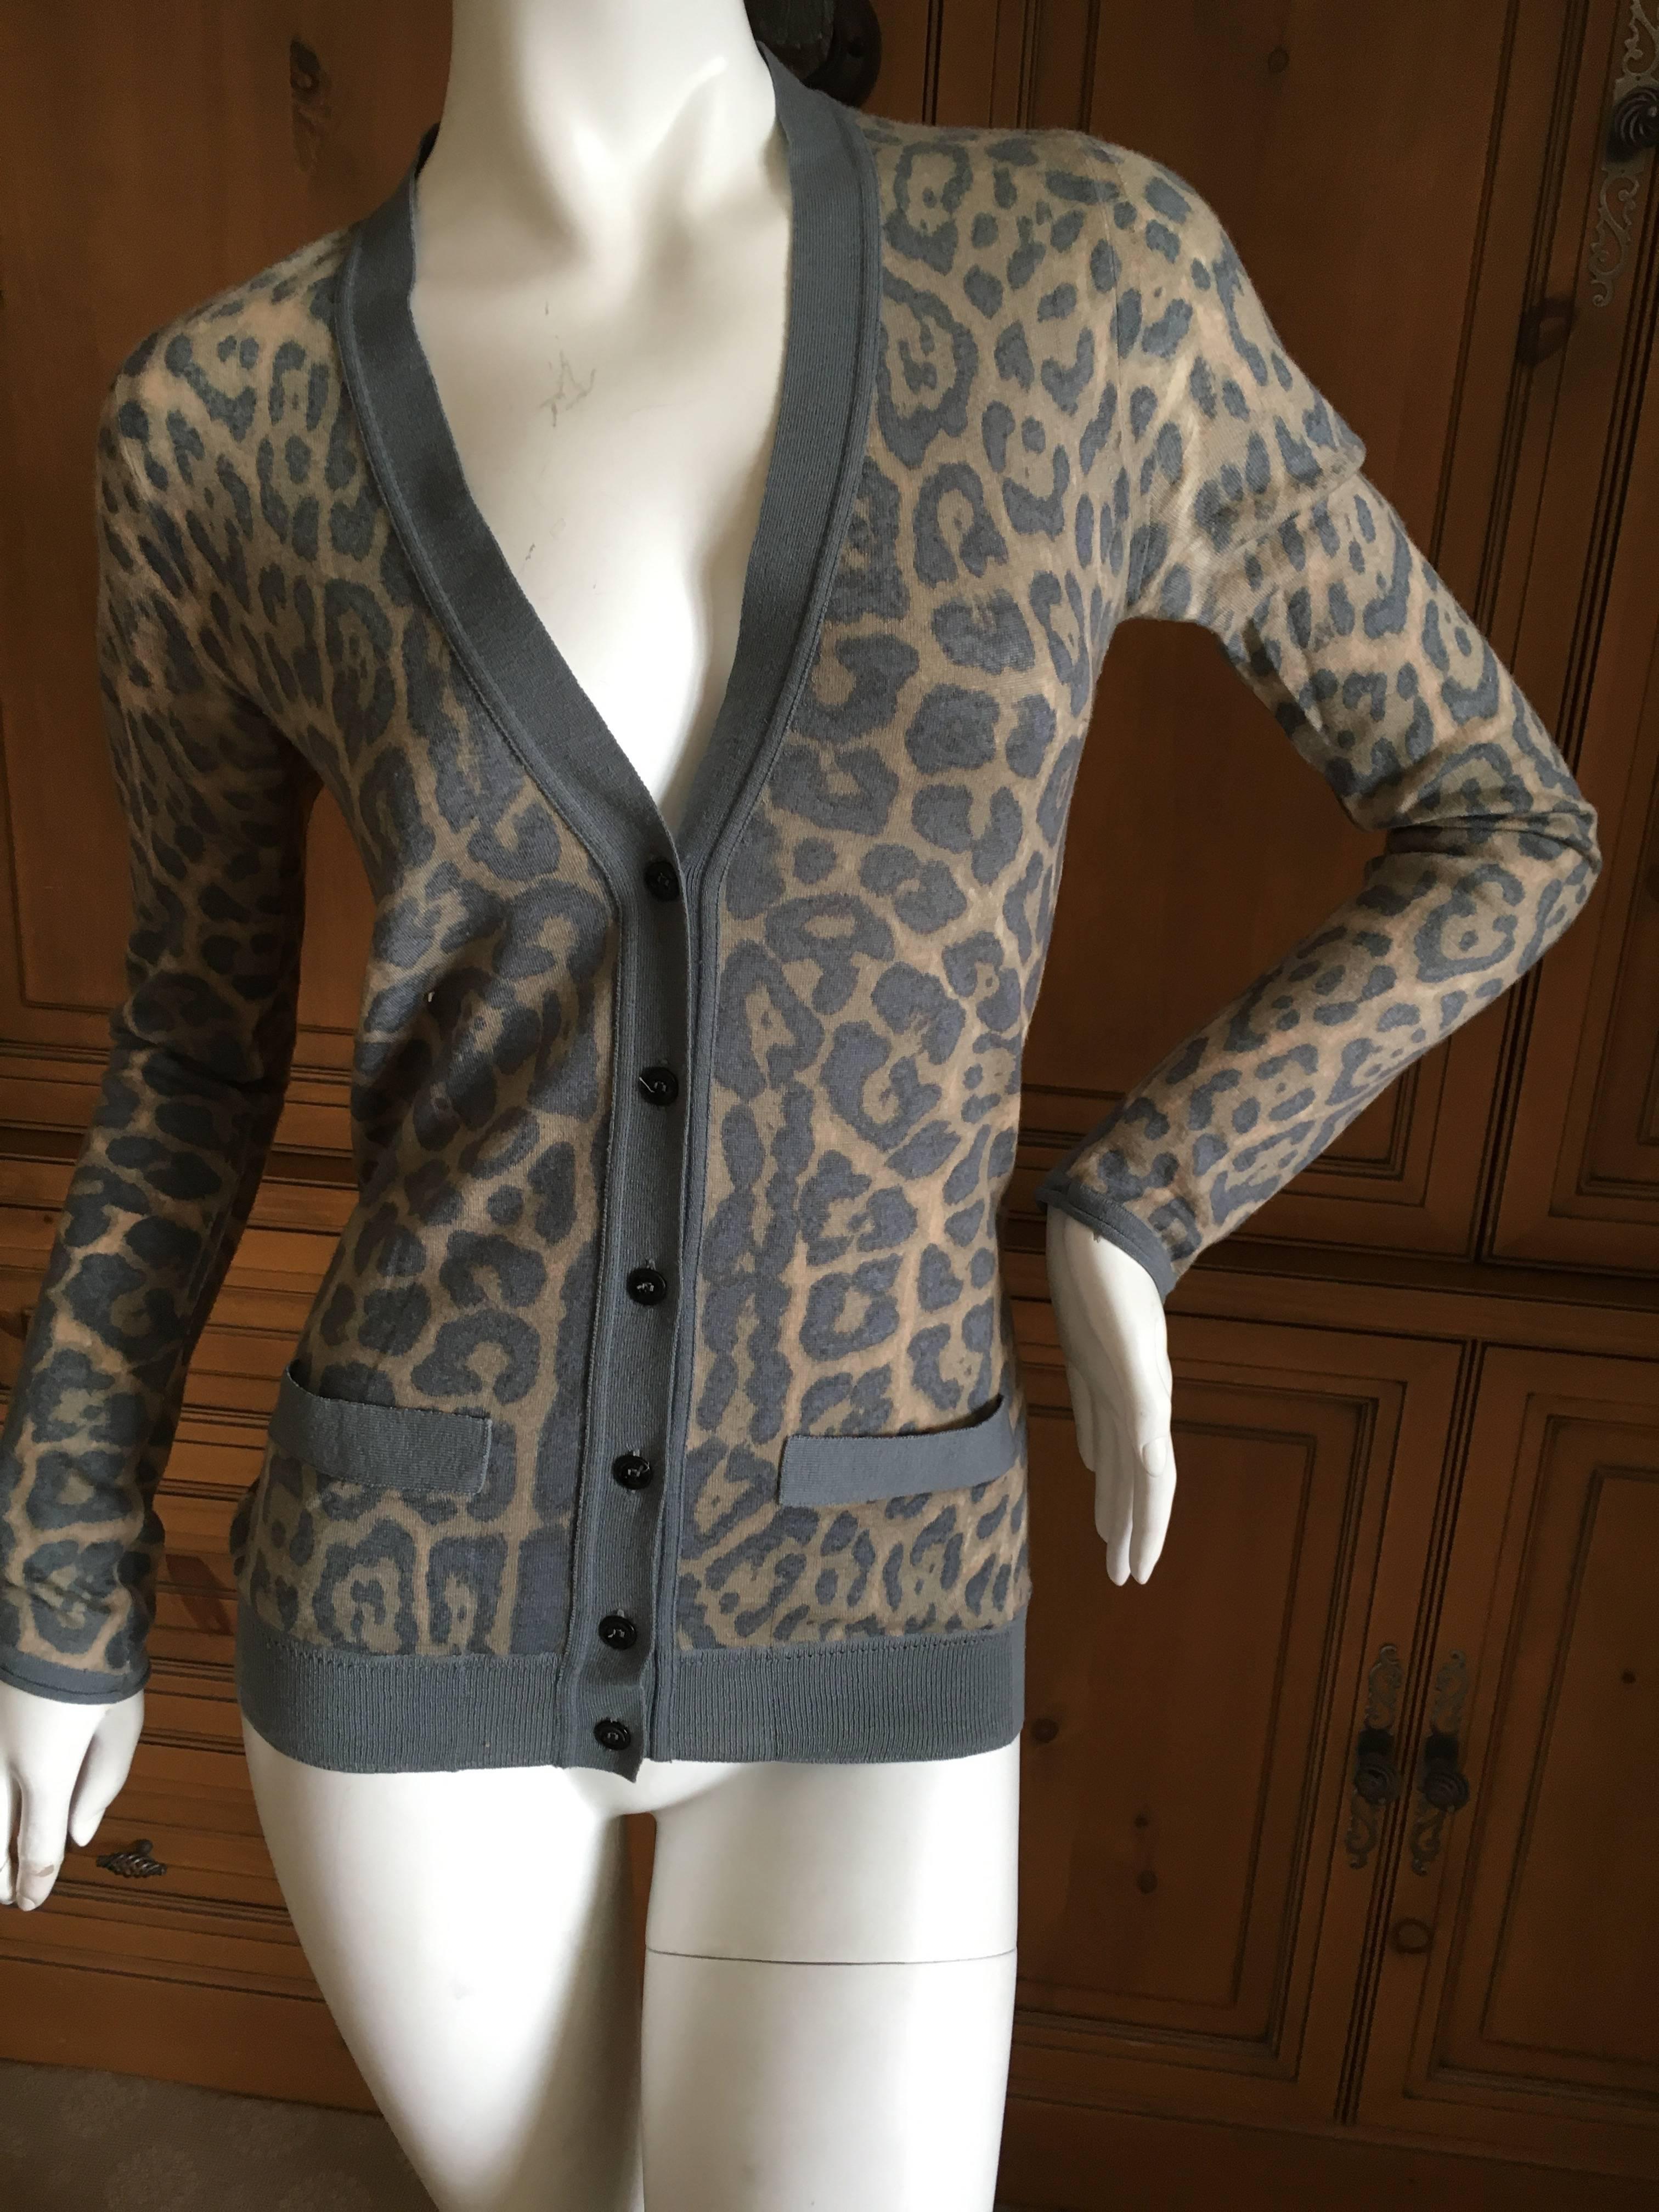 Yves Saint Laurent Sheer Pure Cashmere Leopard Print Cardigan Sweater
Bust 36